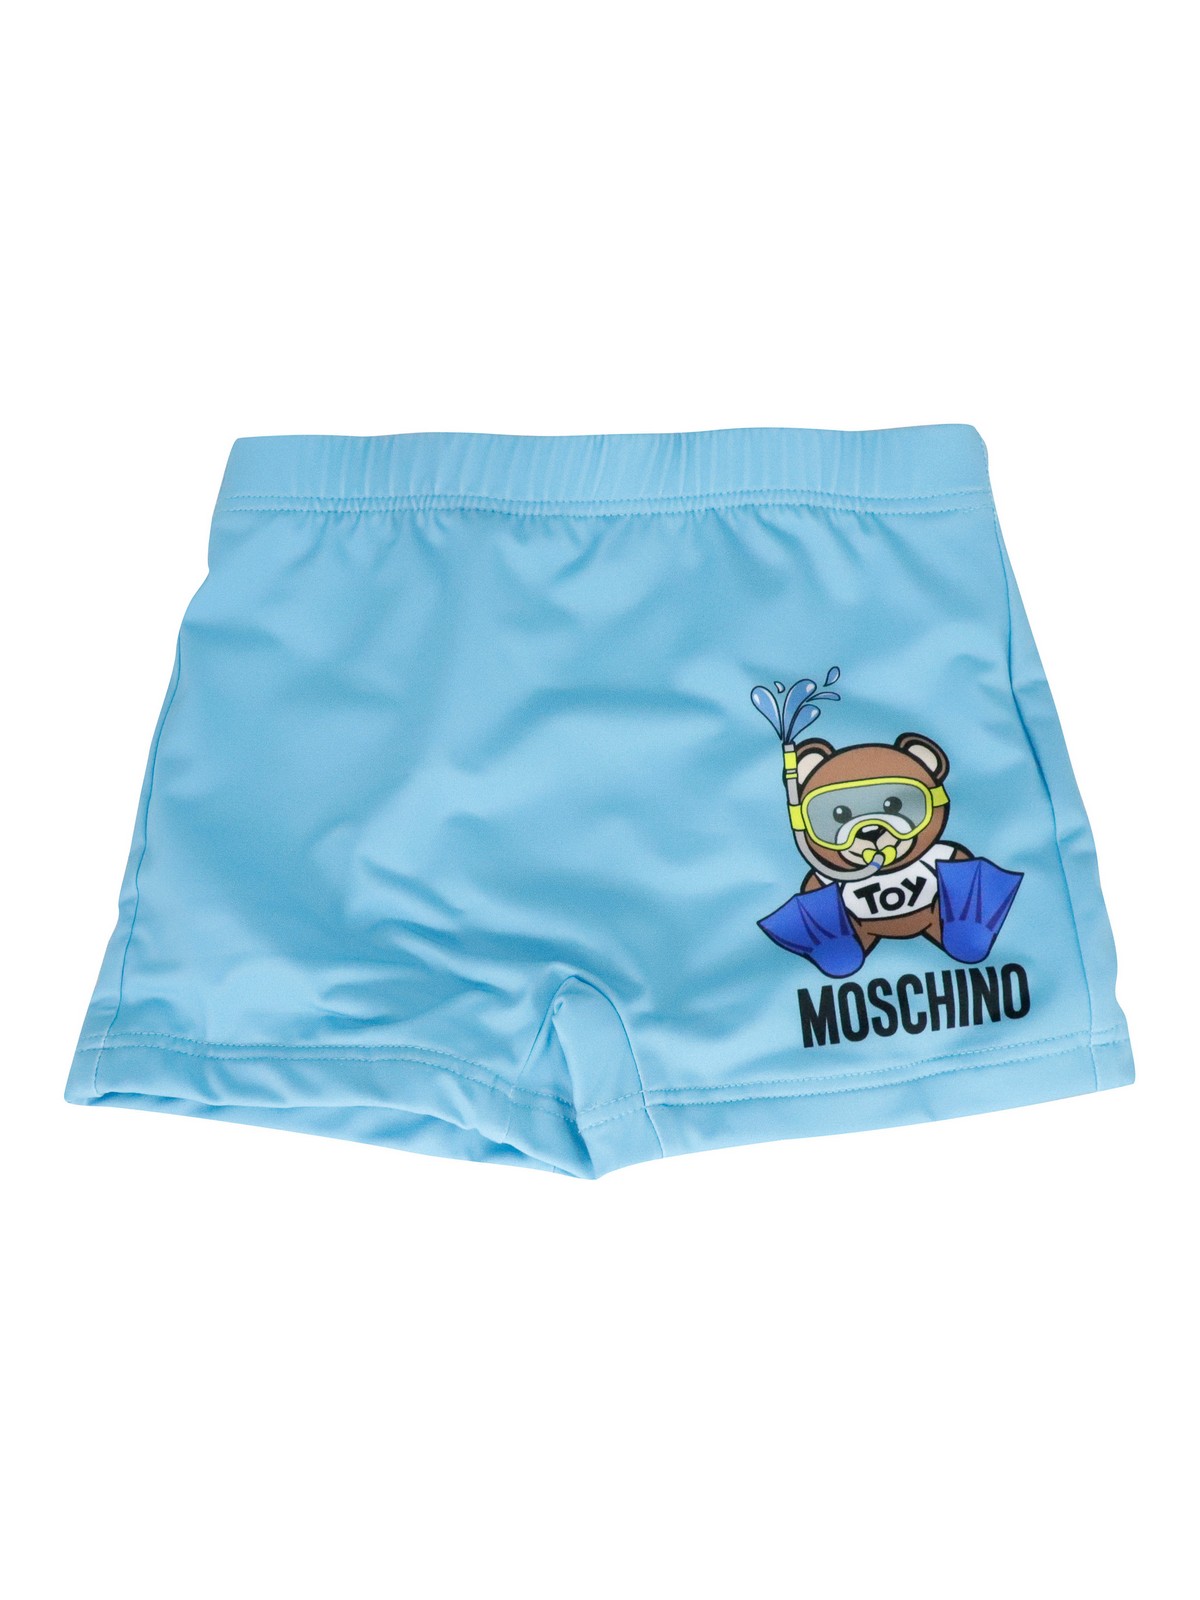 Moschino Teddy Swim Trunks In Light Blue